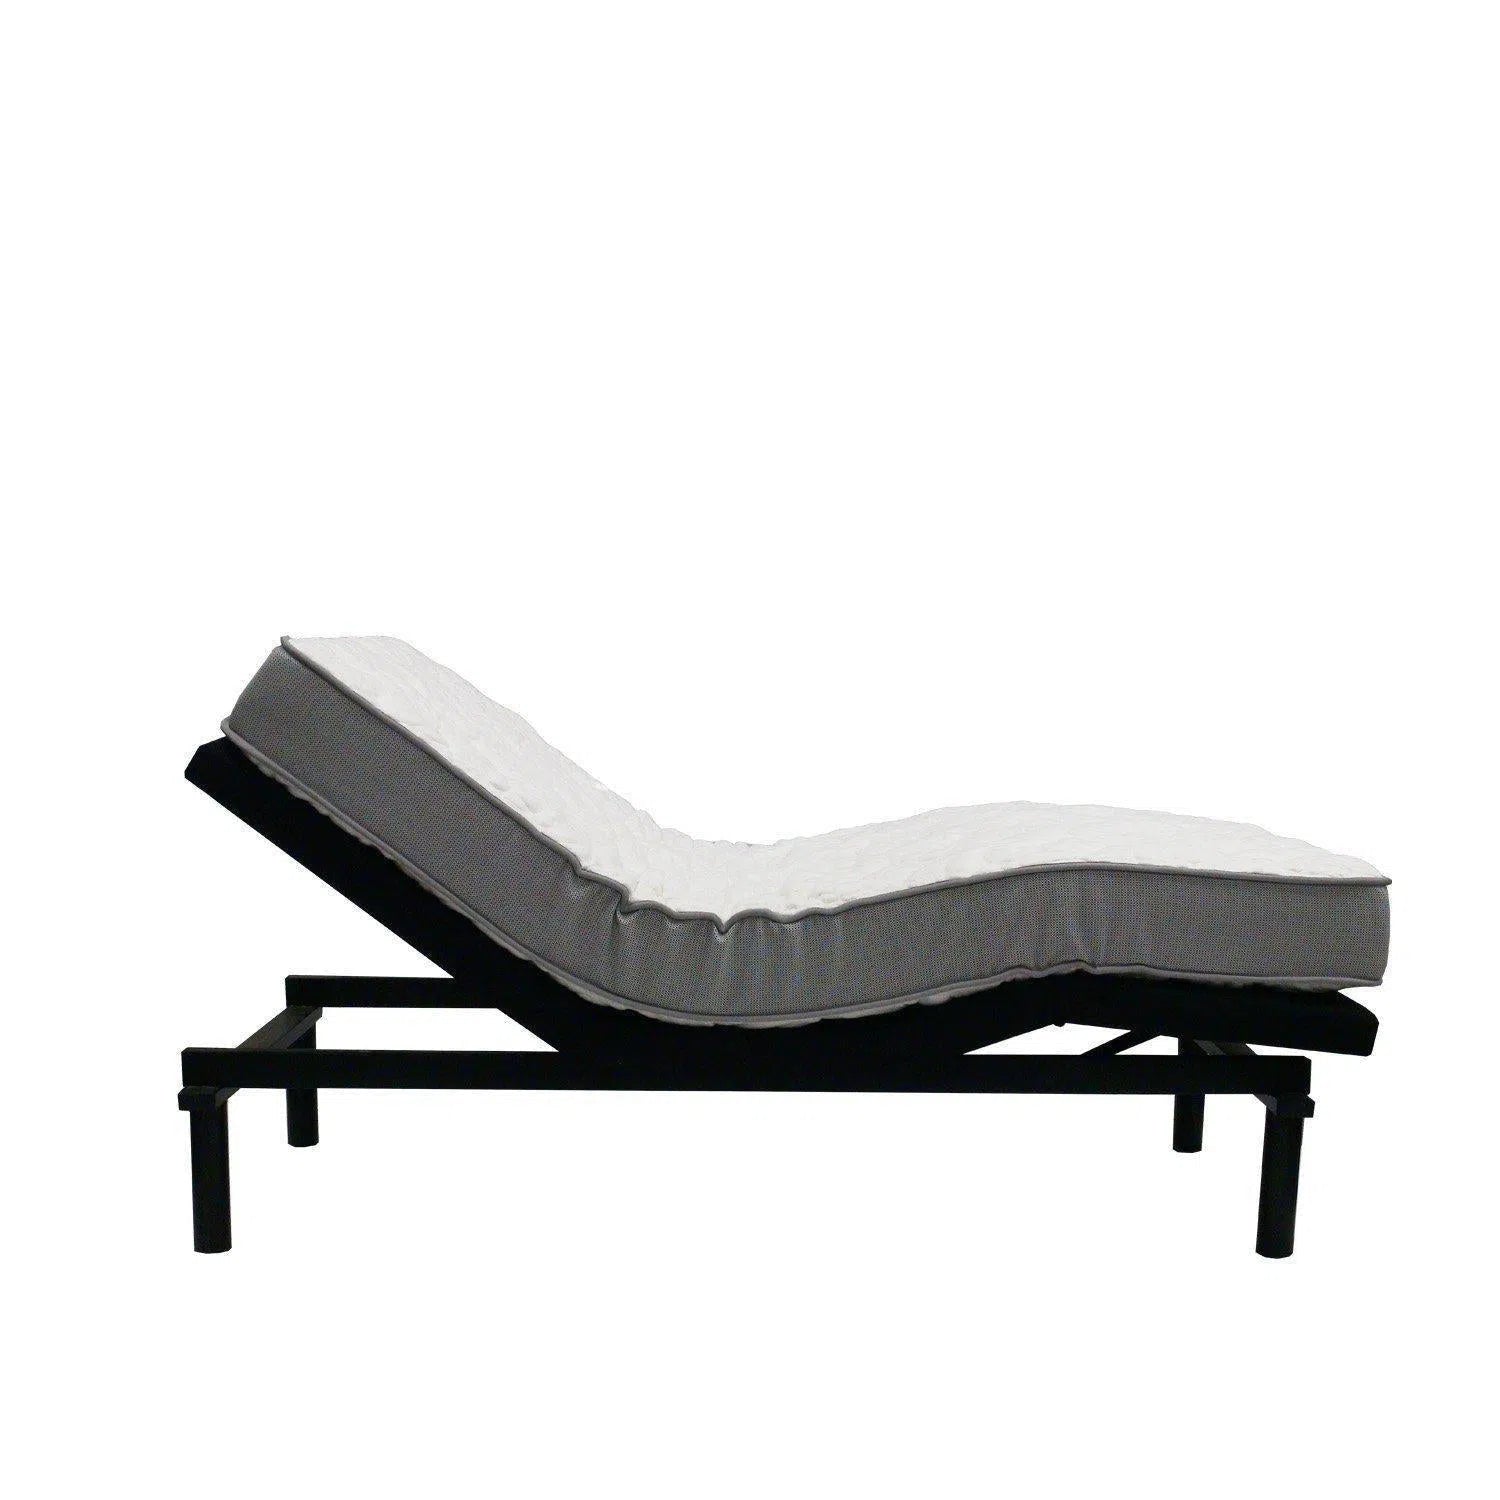 5100-600 Head Foot Adjustable Bed with Standard Mattress